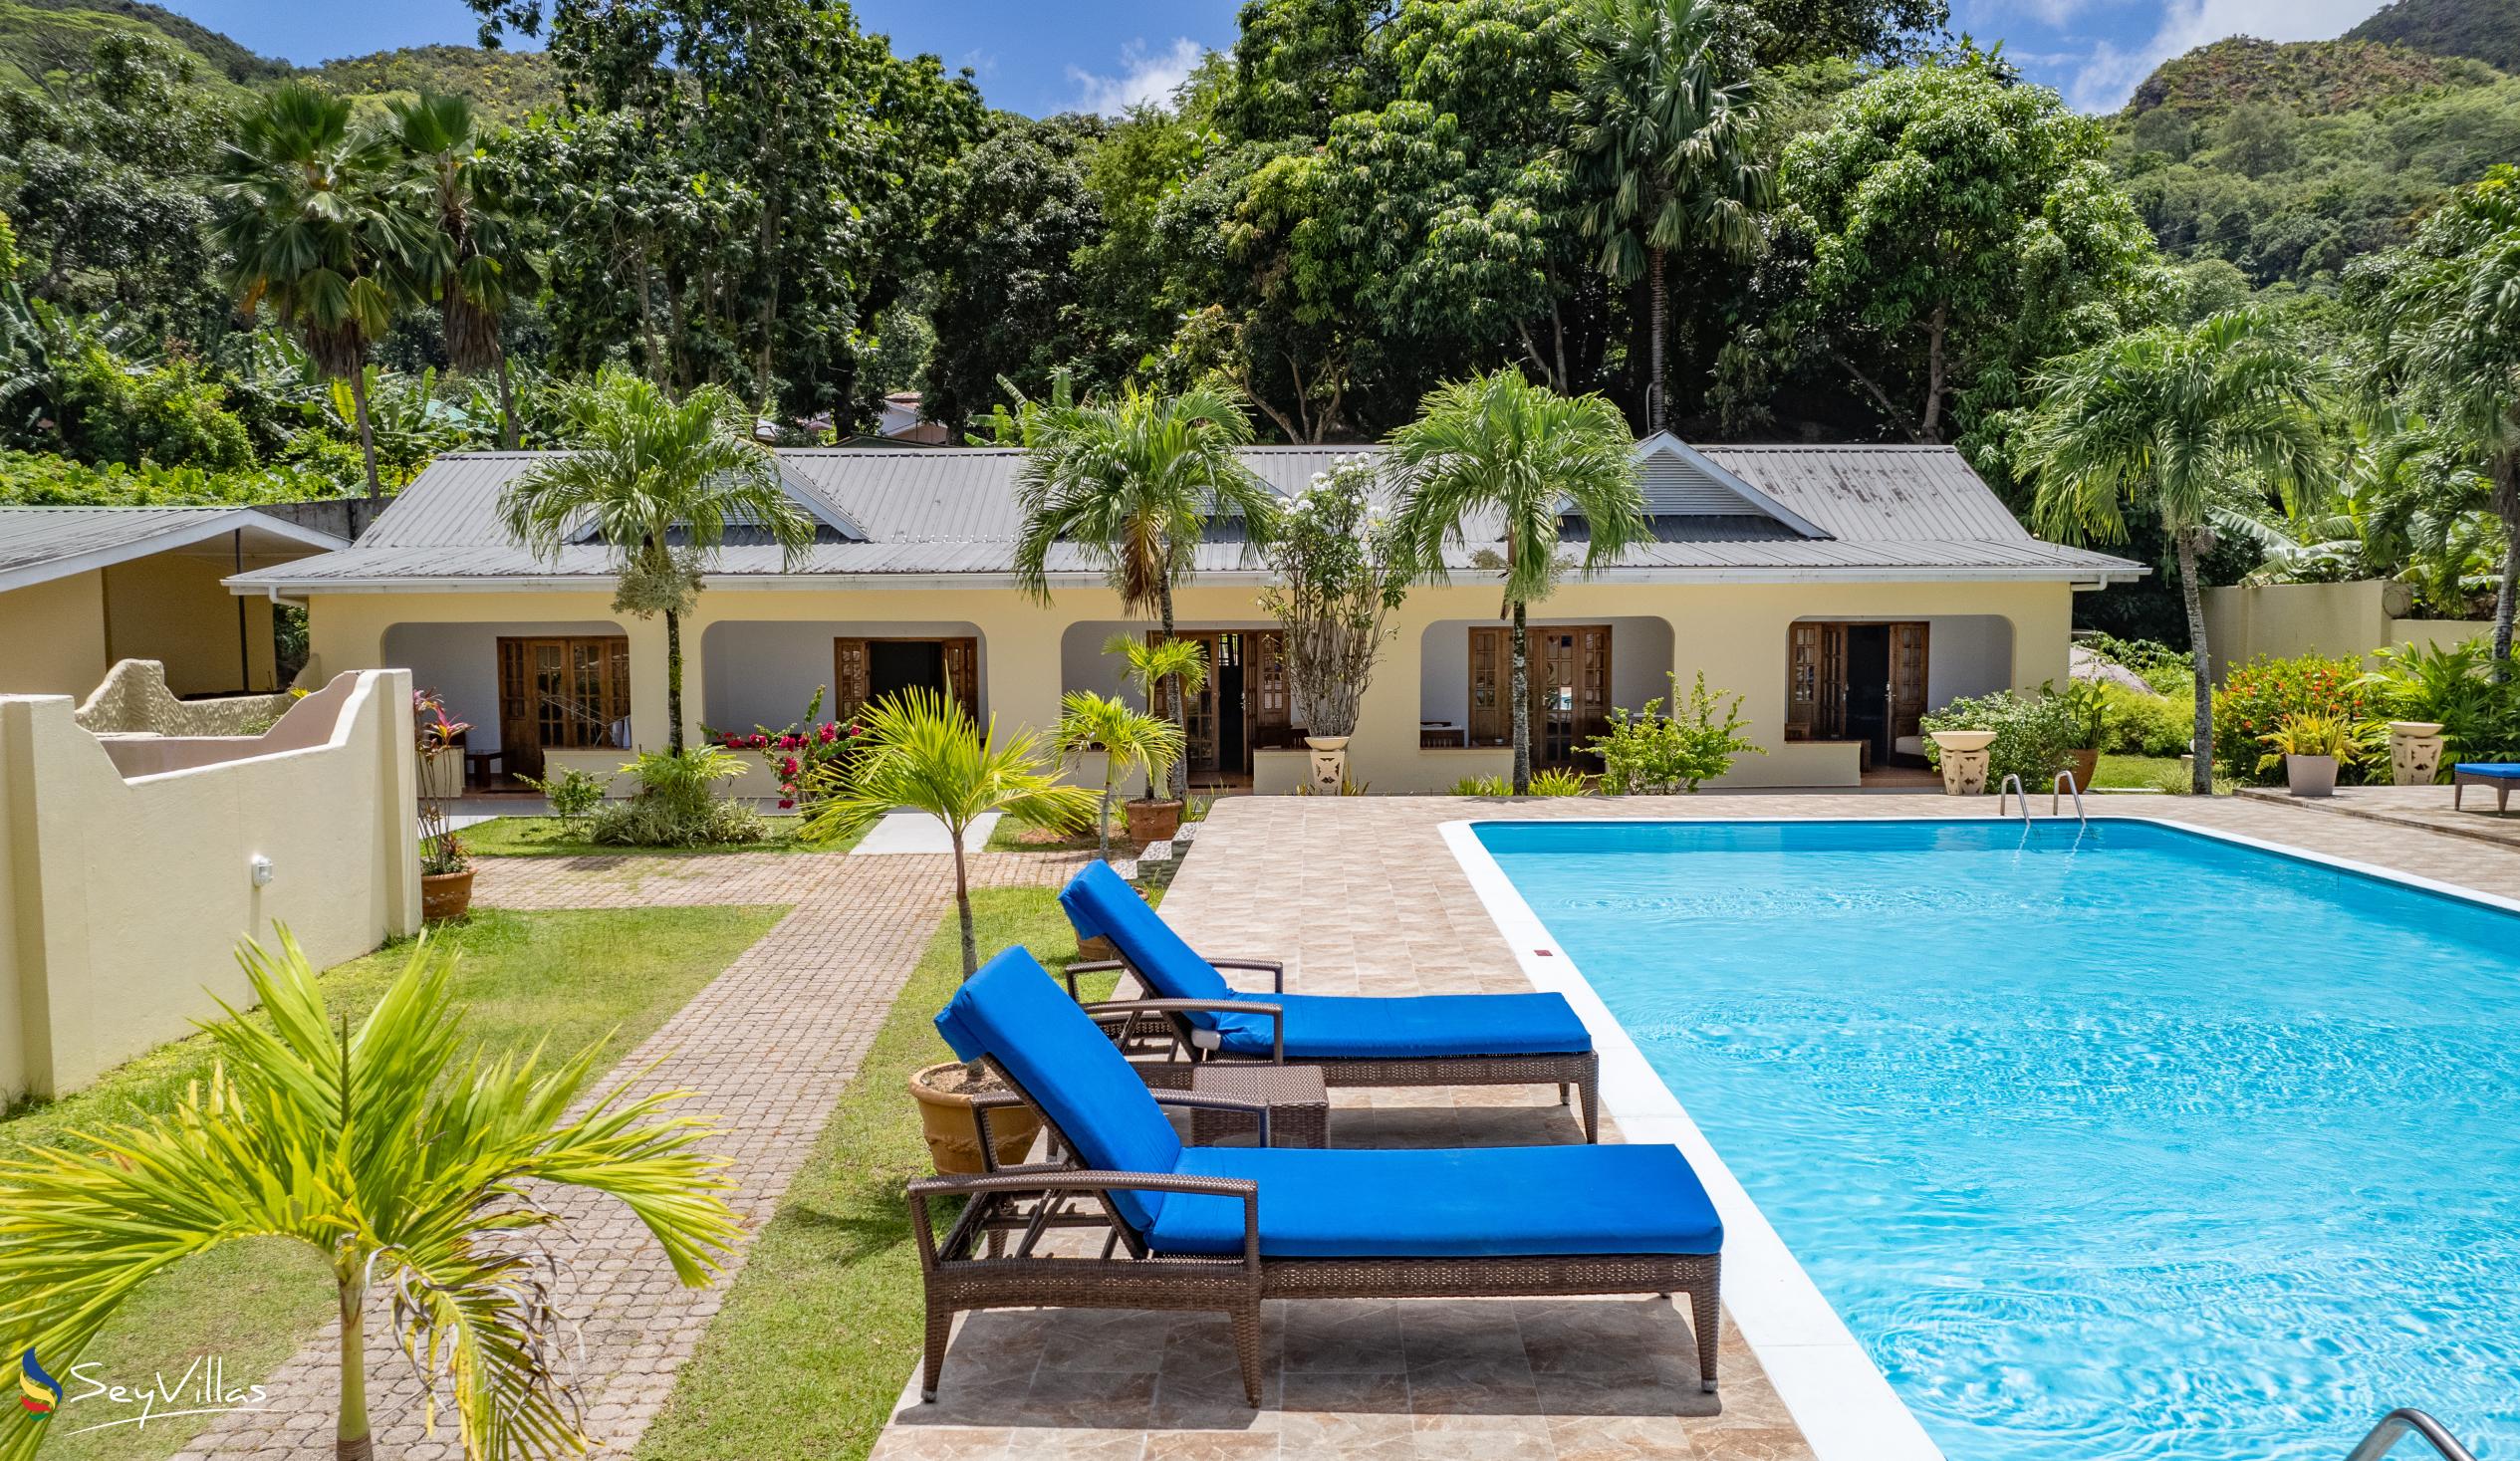 Photo 2: Britannia Hotel - Outdoor area - Praslin (Seychelles)